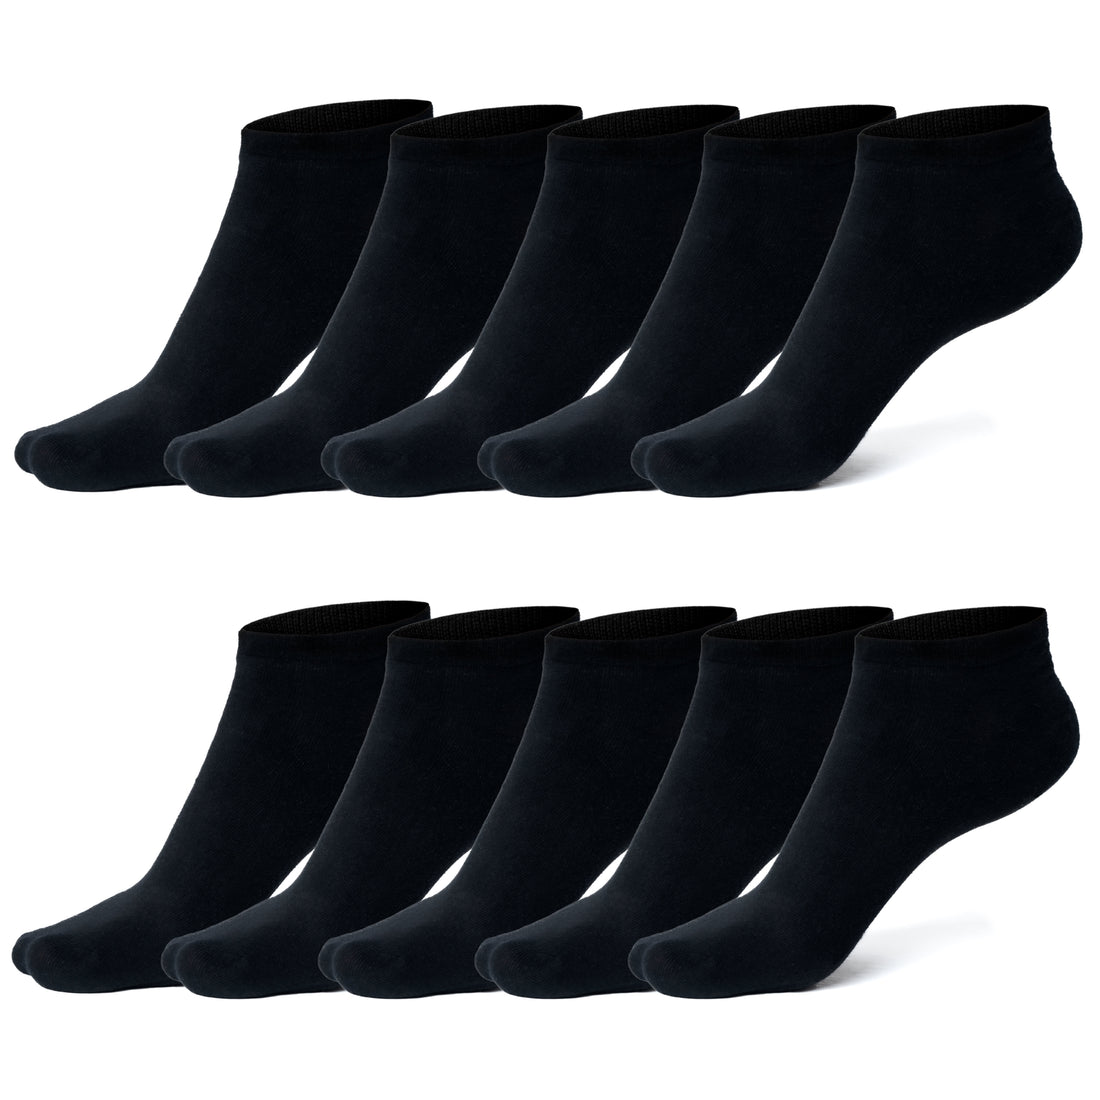 Sneaker Socken Unisex schwarz 10 Paar verschiedene Größen Sportsocken Herren/Damen 95% Baumwolle 5% Elastan